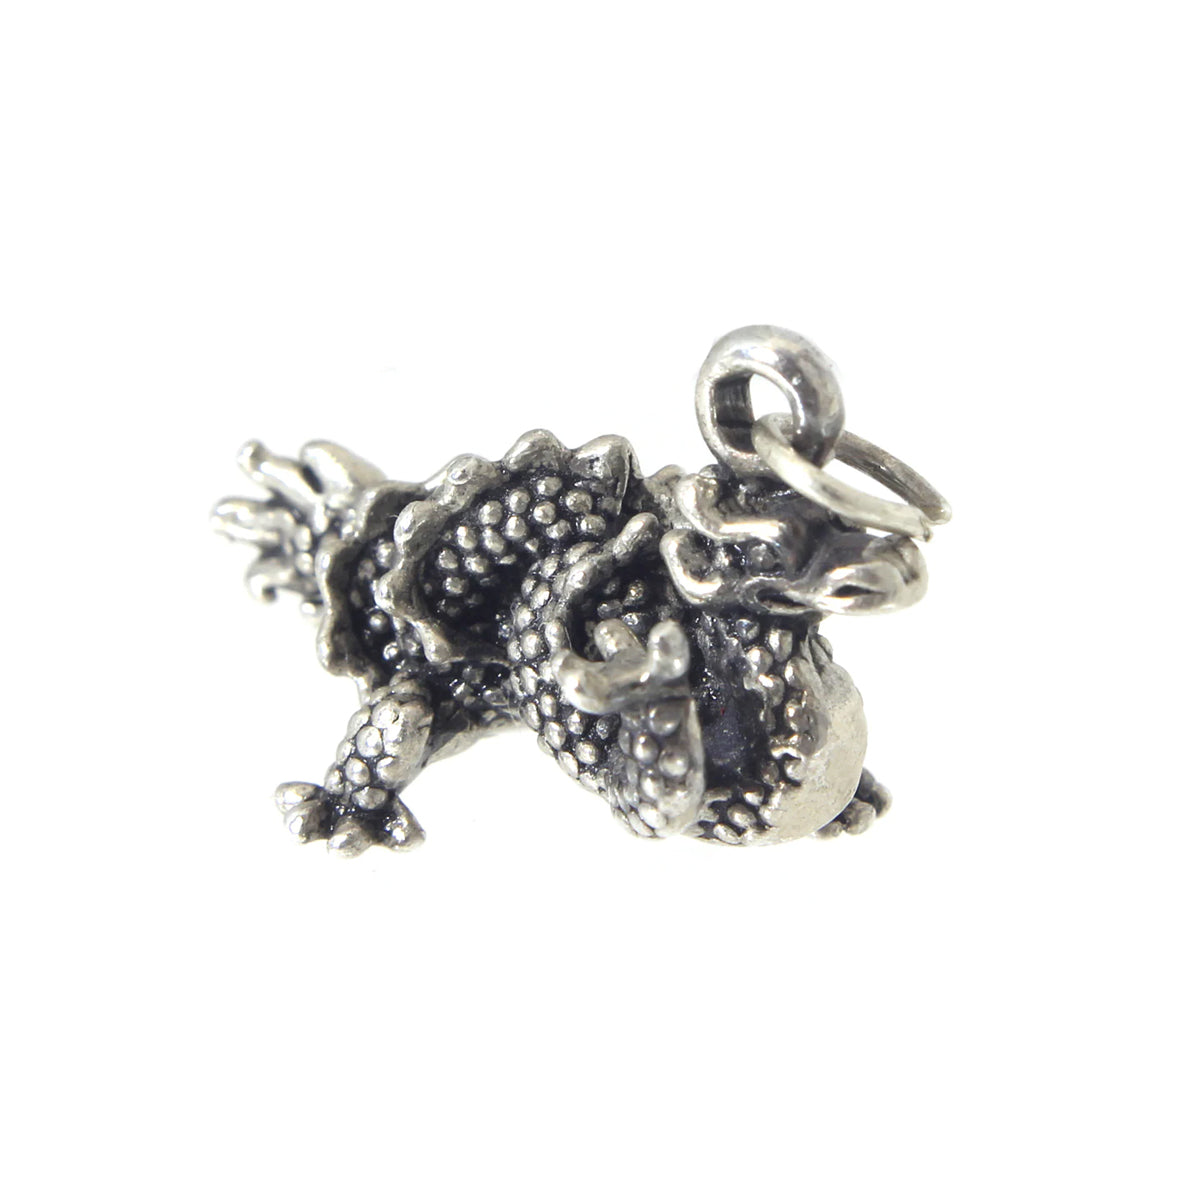 Dragon charm/pendant, twisting tail, Sterling Silver